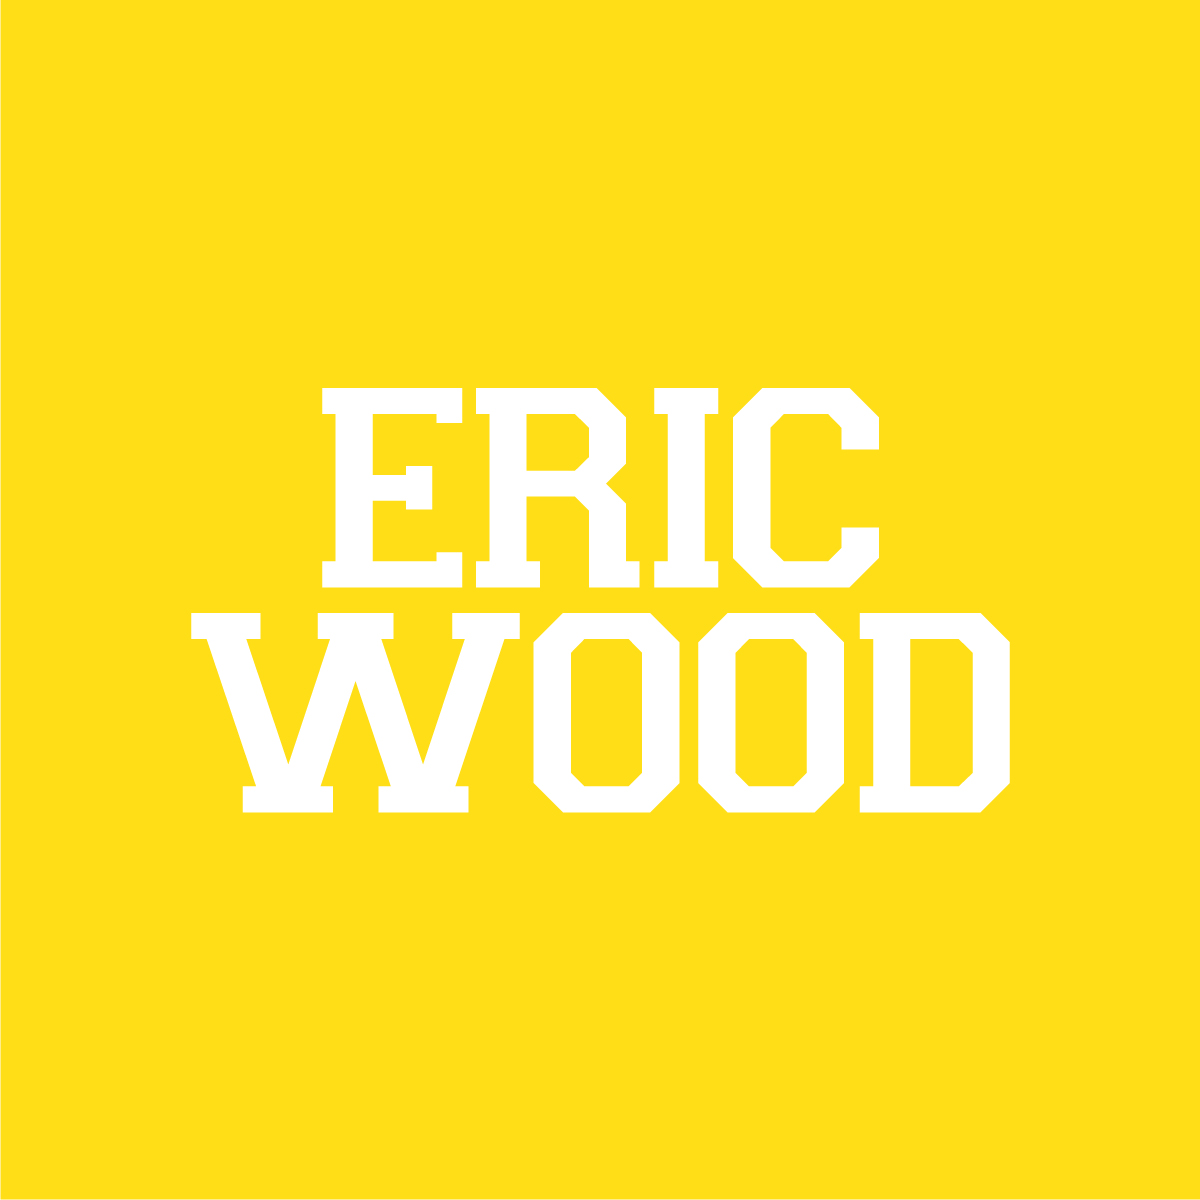 eric wood